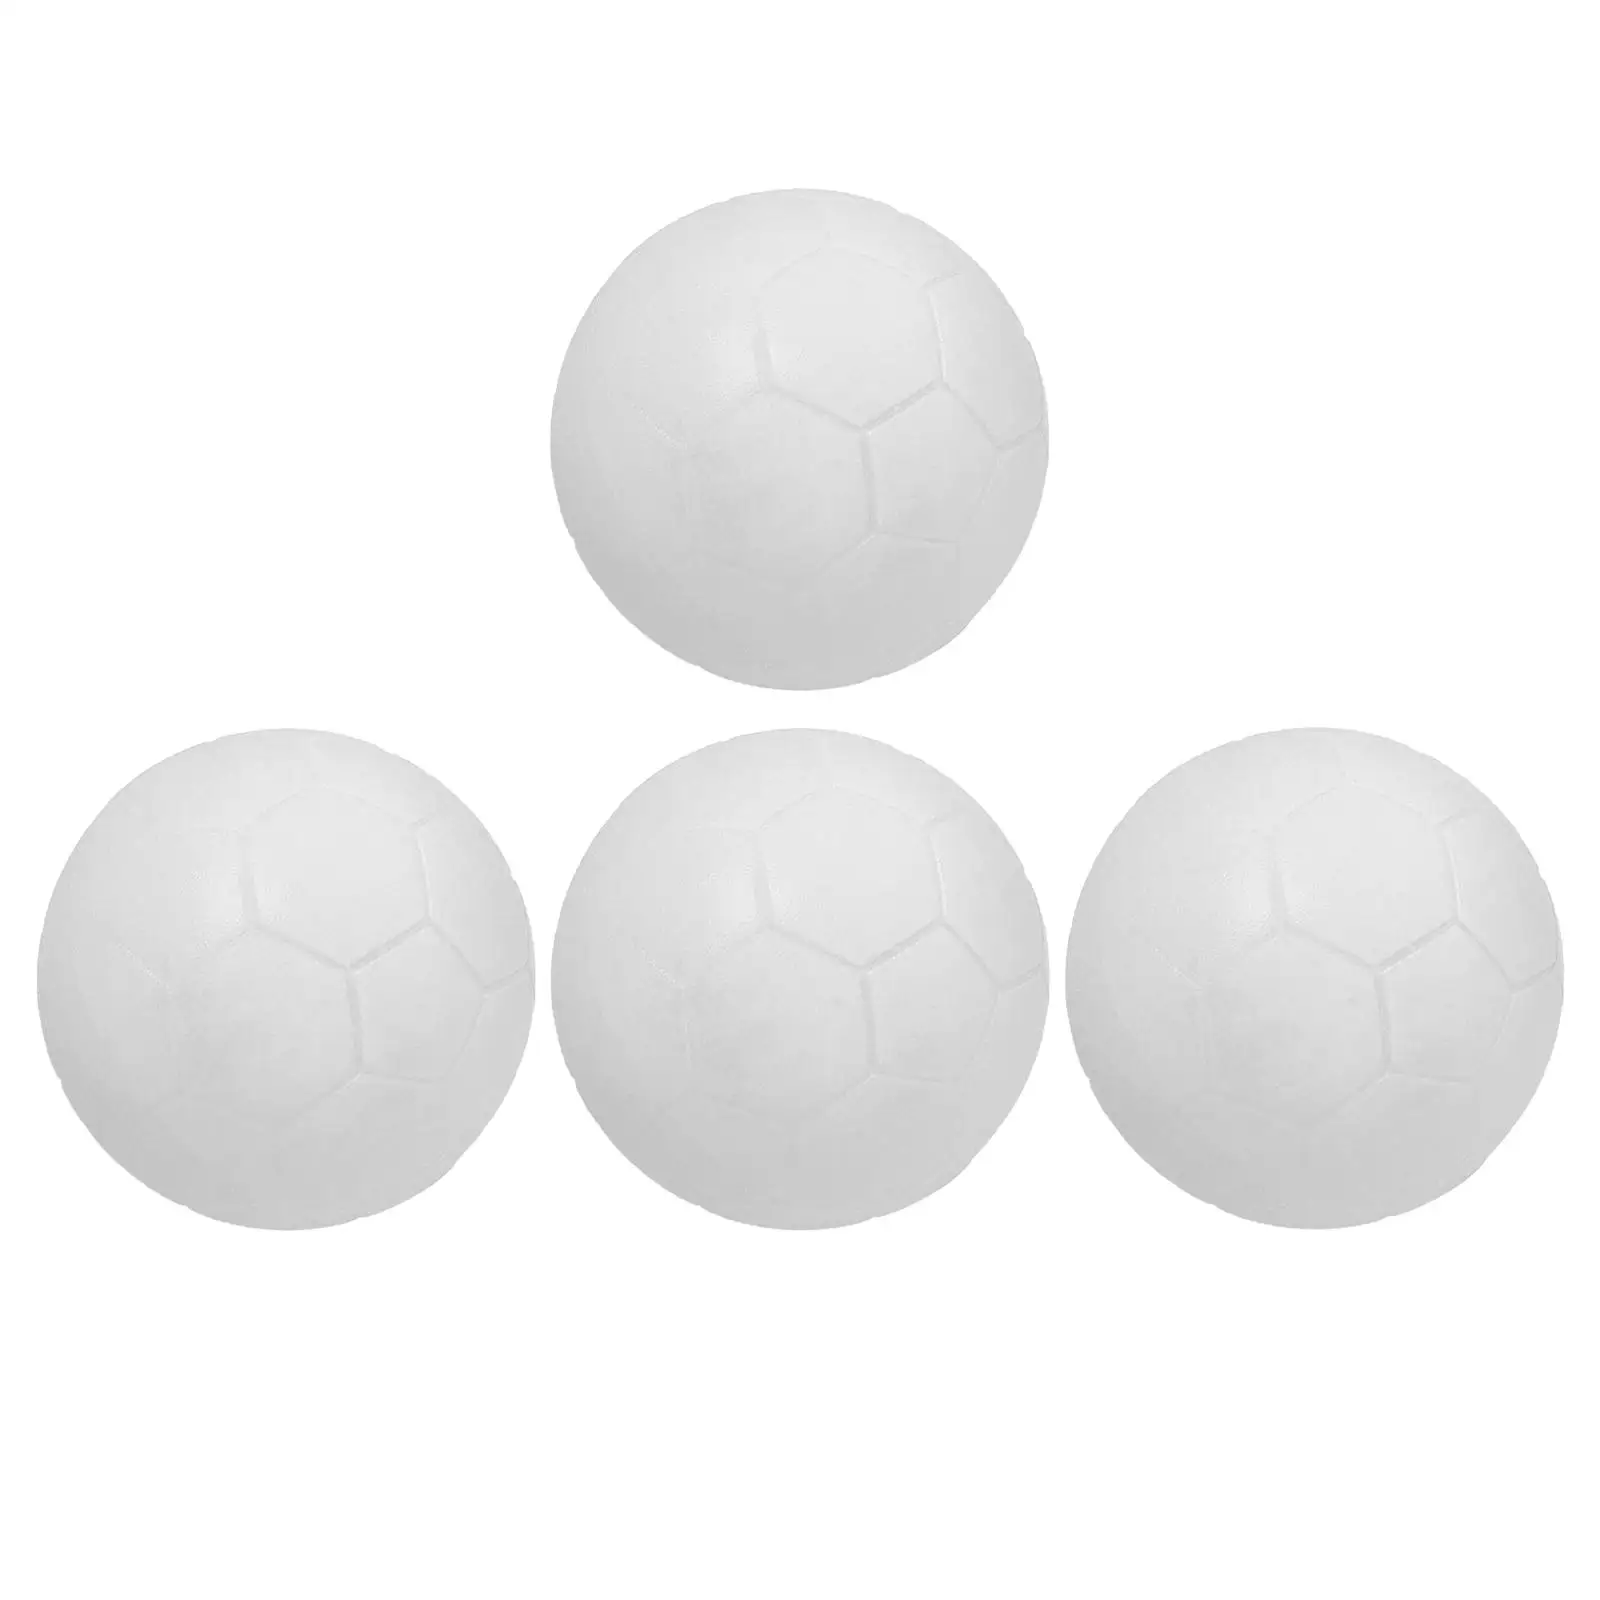 4x Lightweight Table Soccer Balls Size 36mm Football White Mini Standard Size